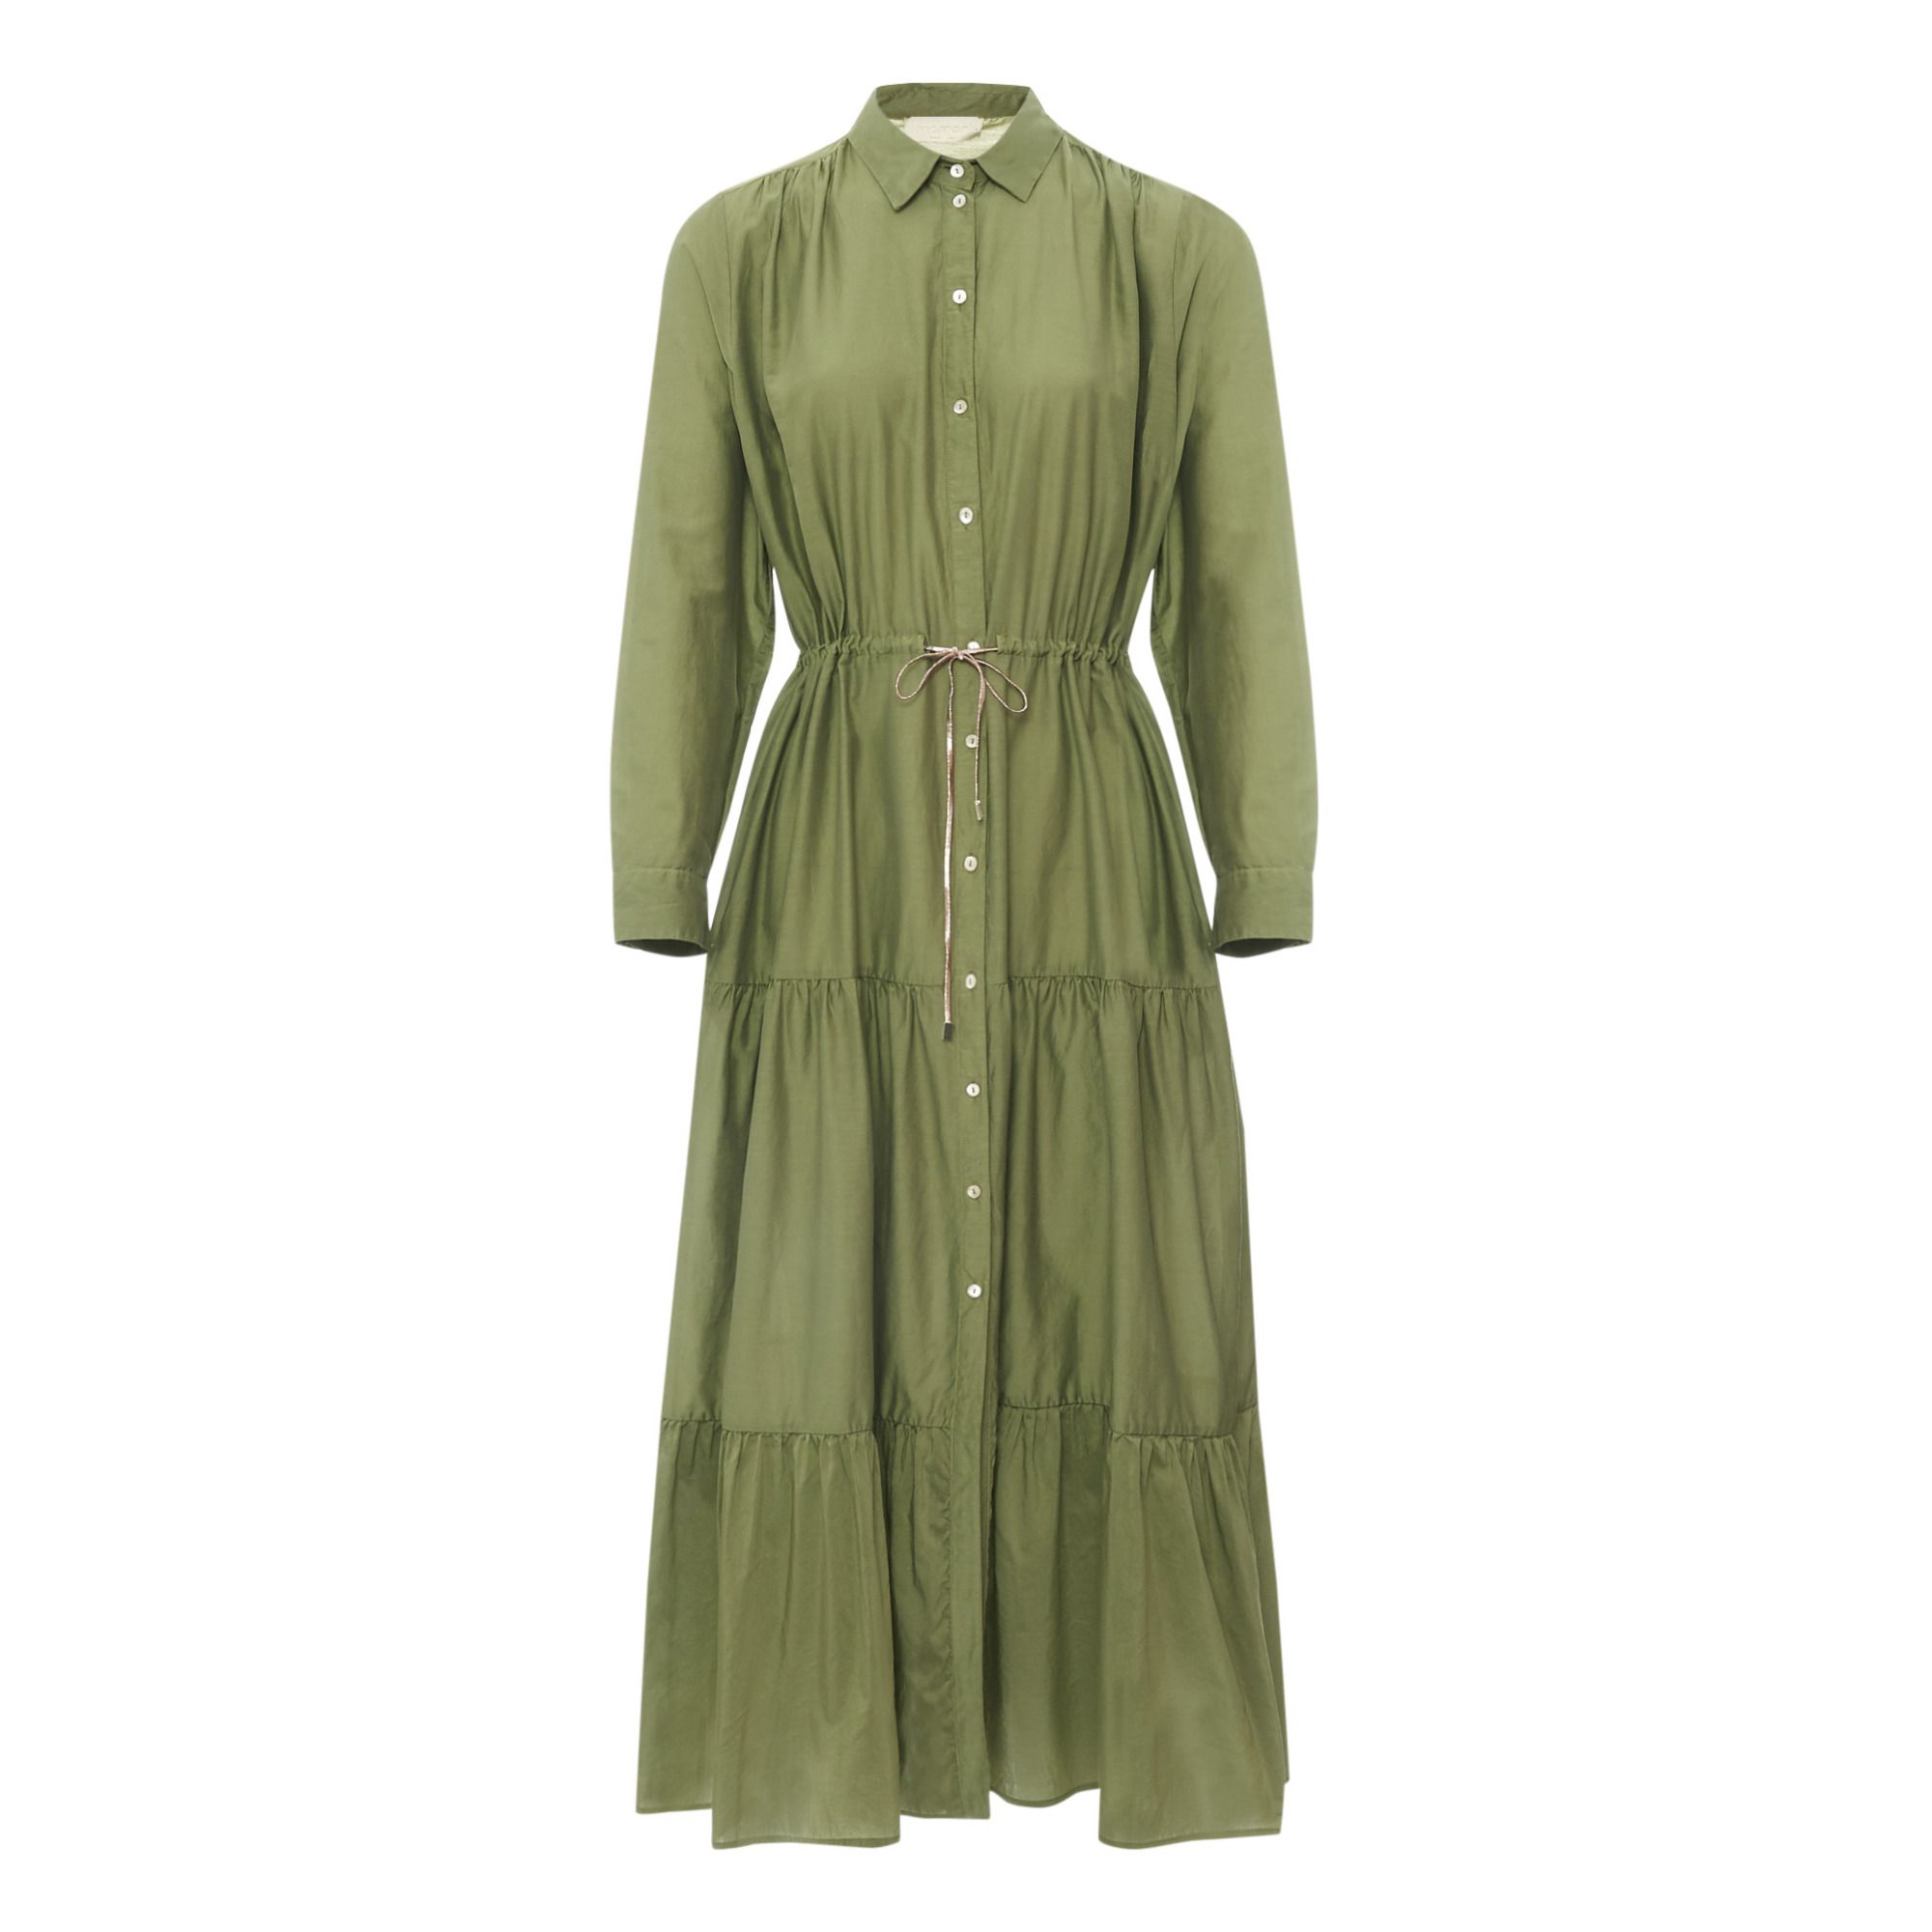 Momoni - Robe Chemise Sicilia Coton et Soie - Femme - Vert